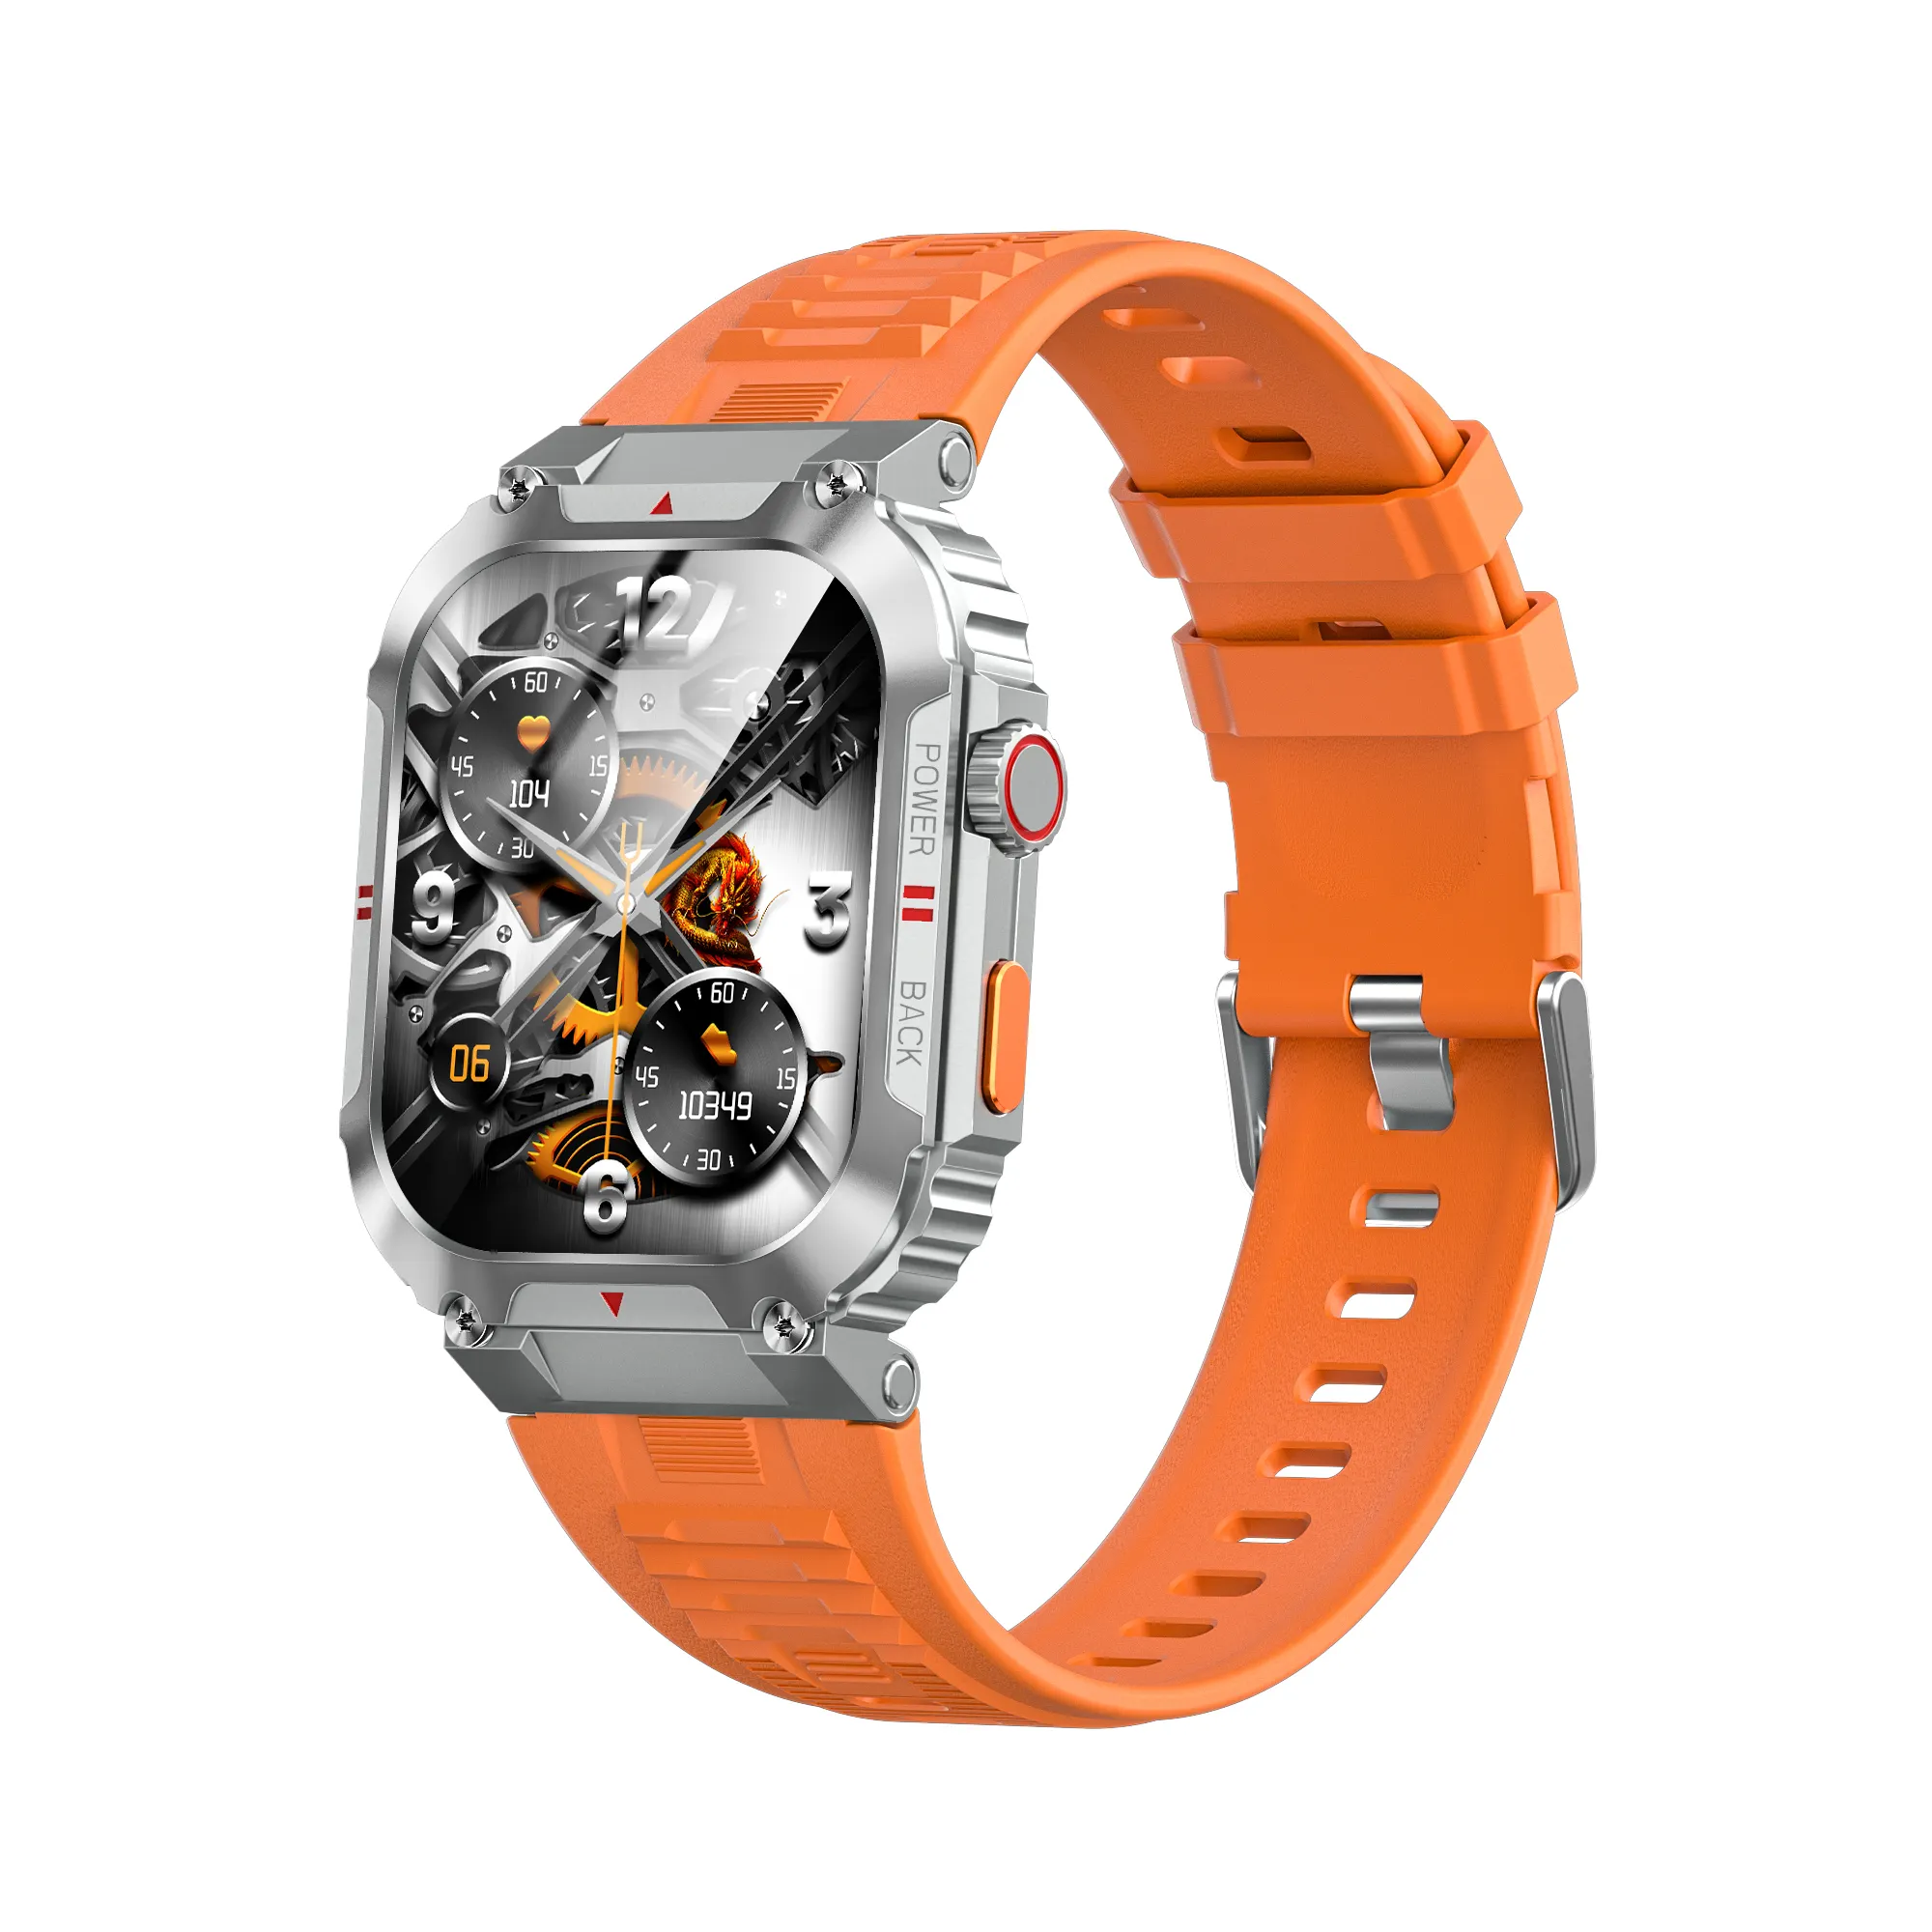 Nuevos relojes deportivos a prueba de agua Relojes Inteligentes Fitness Smart Watch Phone Android para C58 Smart Watch